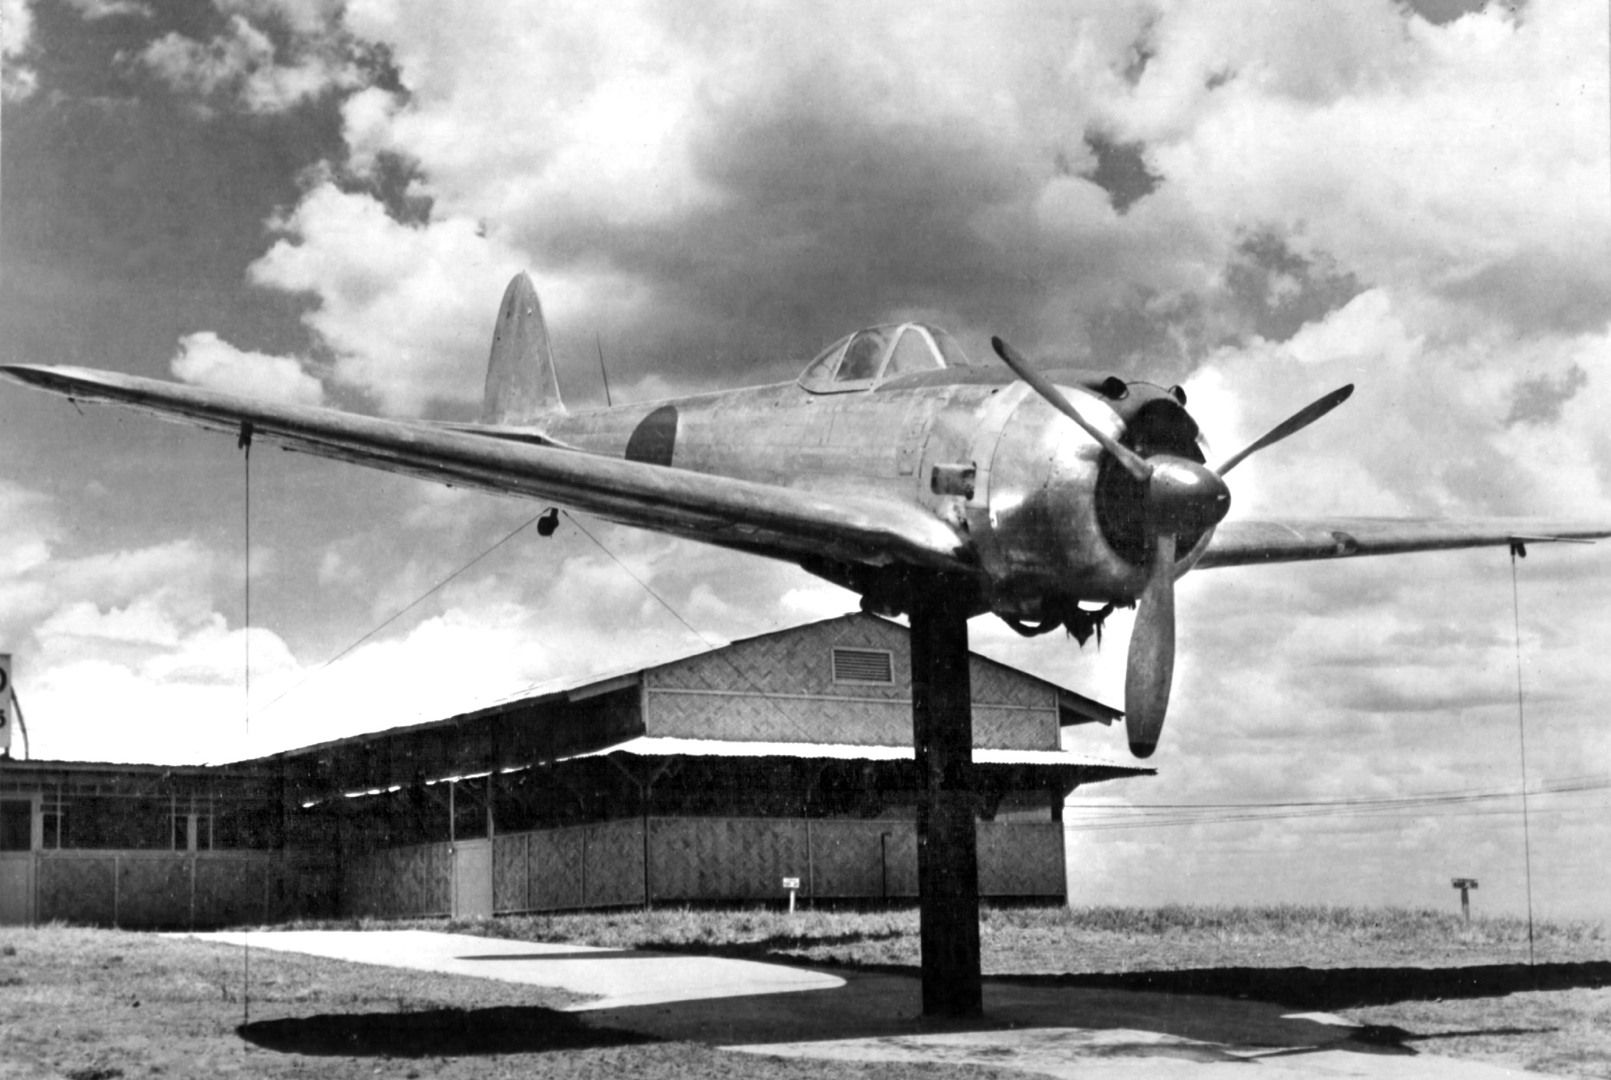 Japanese Nakajima Ki-43 or Ki-44 "Oscar